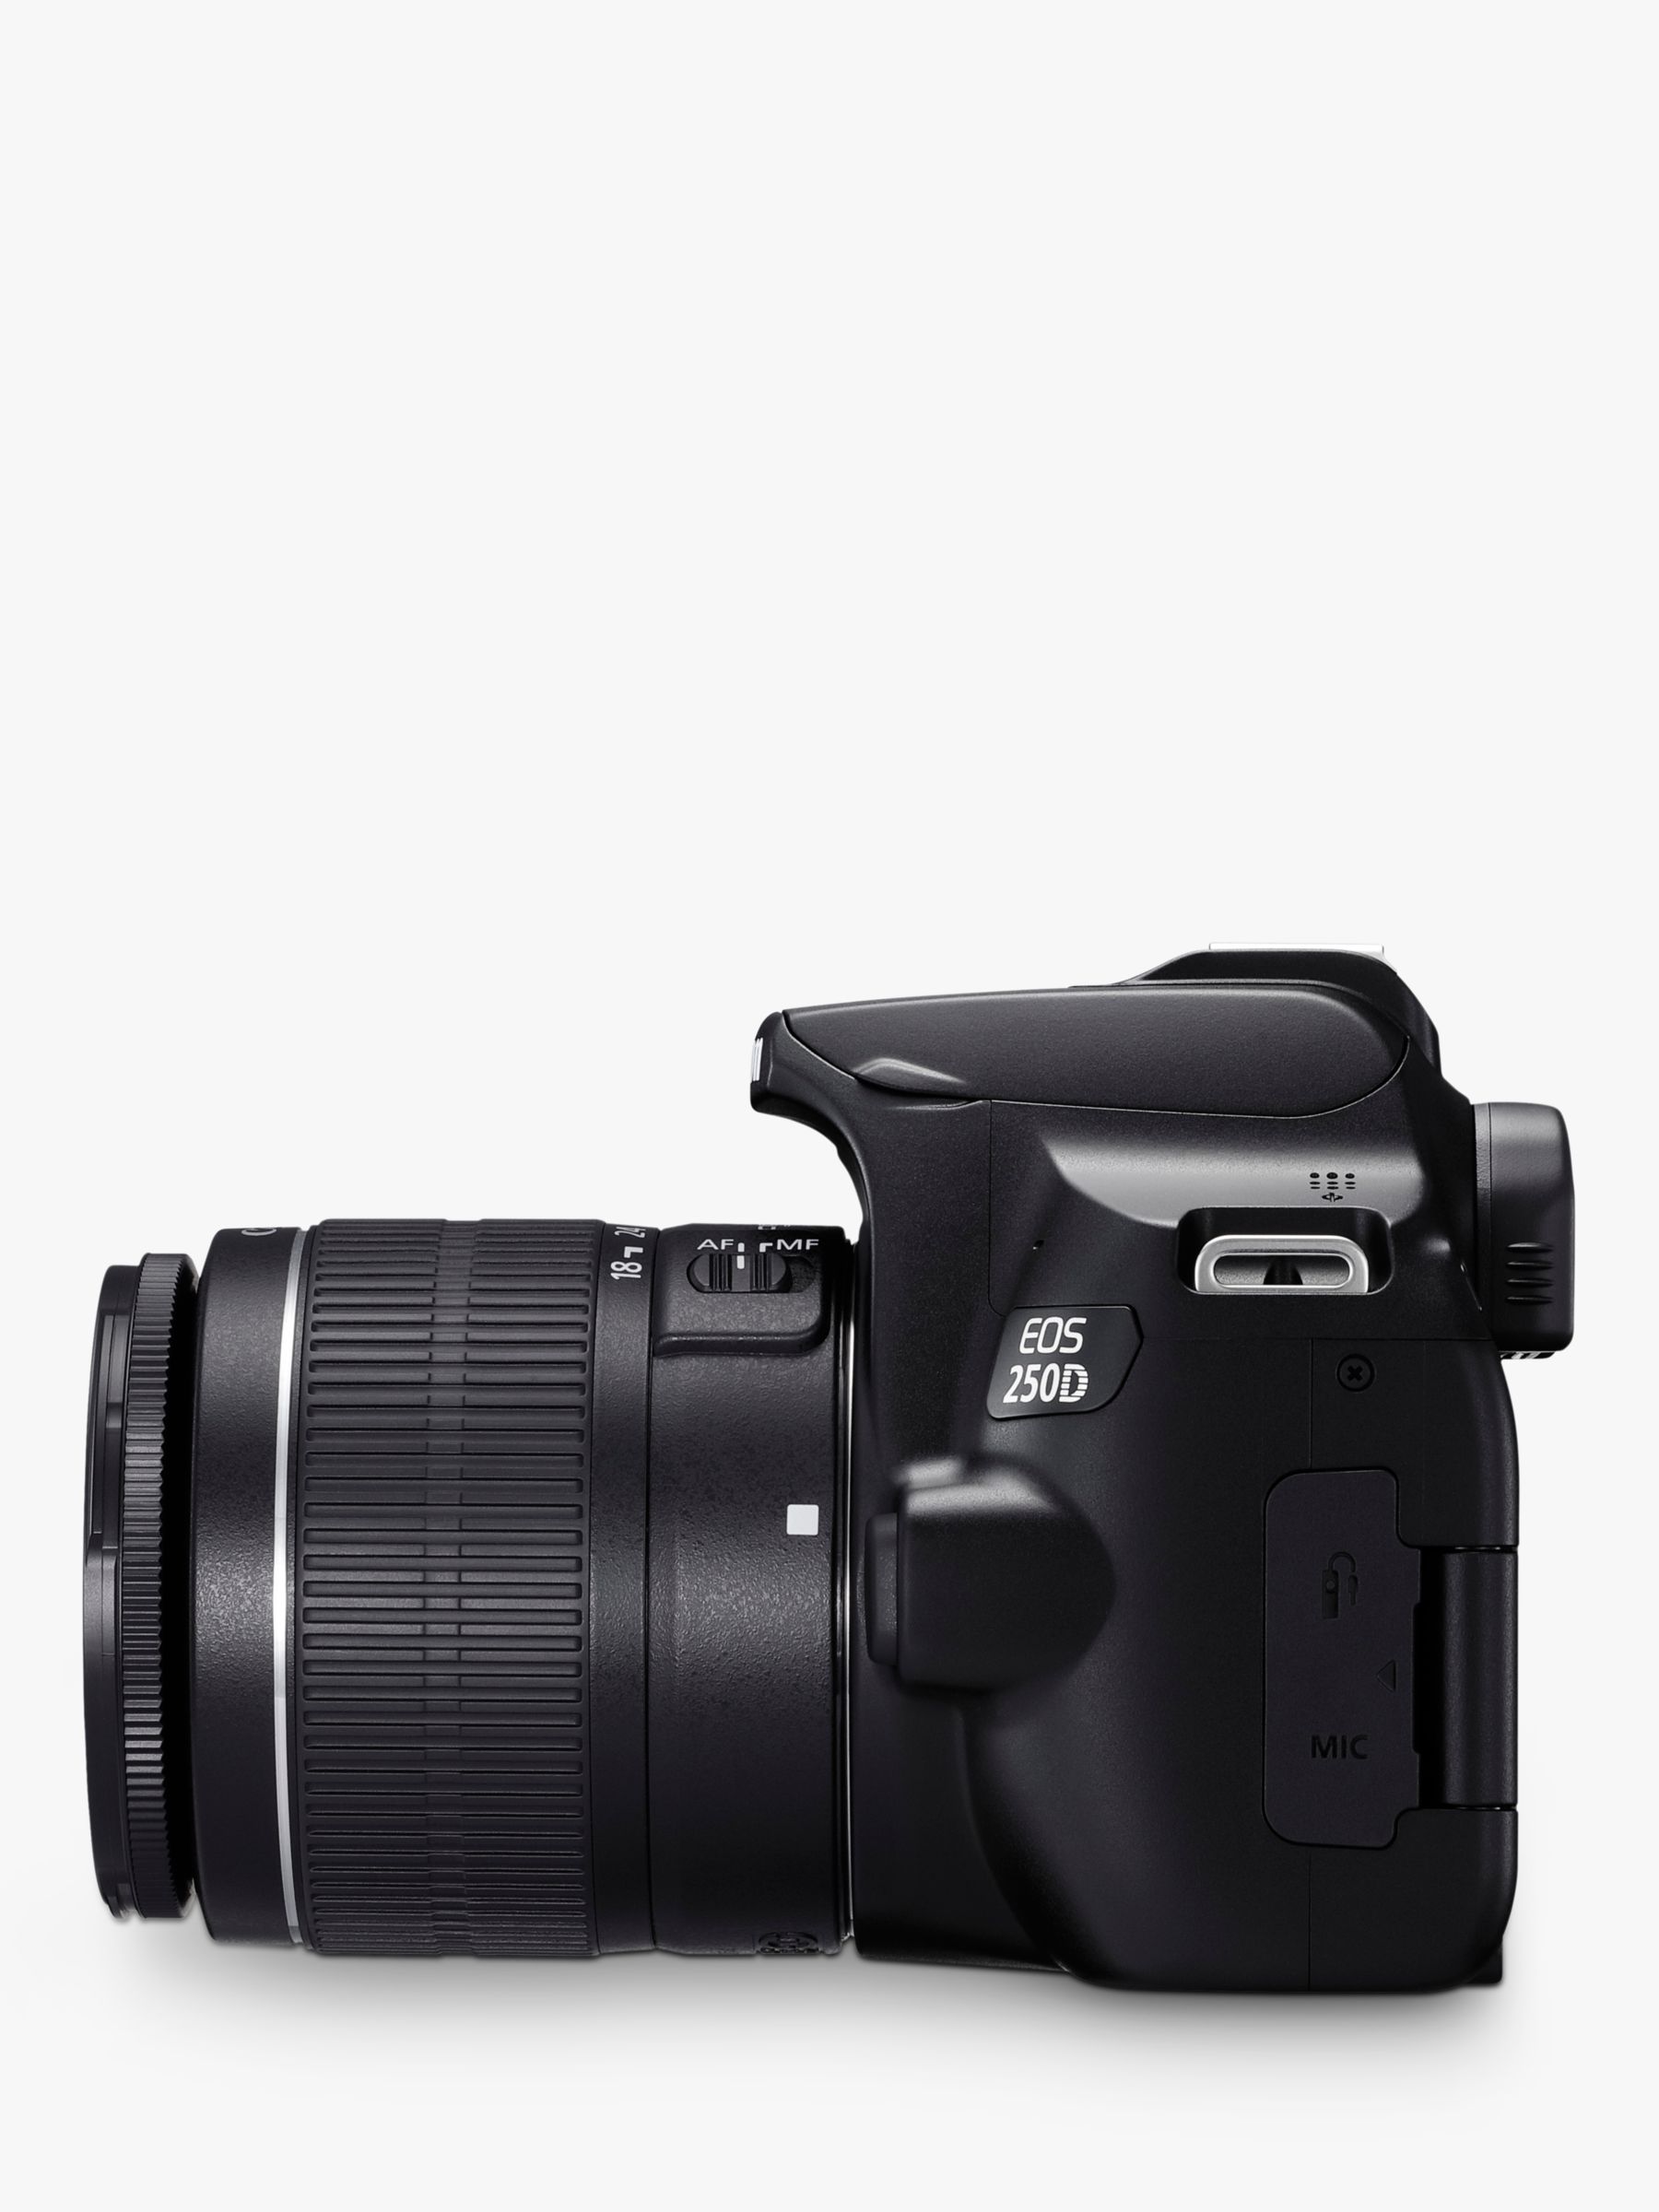 Canon Eos 250d Digital Slr Camera With 18 55mm 75 300mm Lenses 4k Ultra Hd